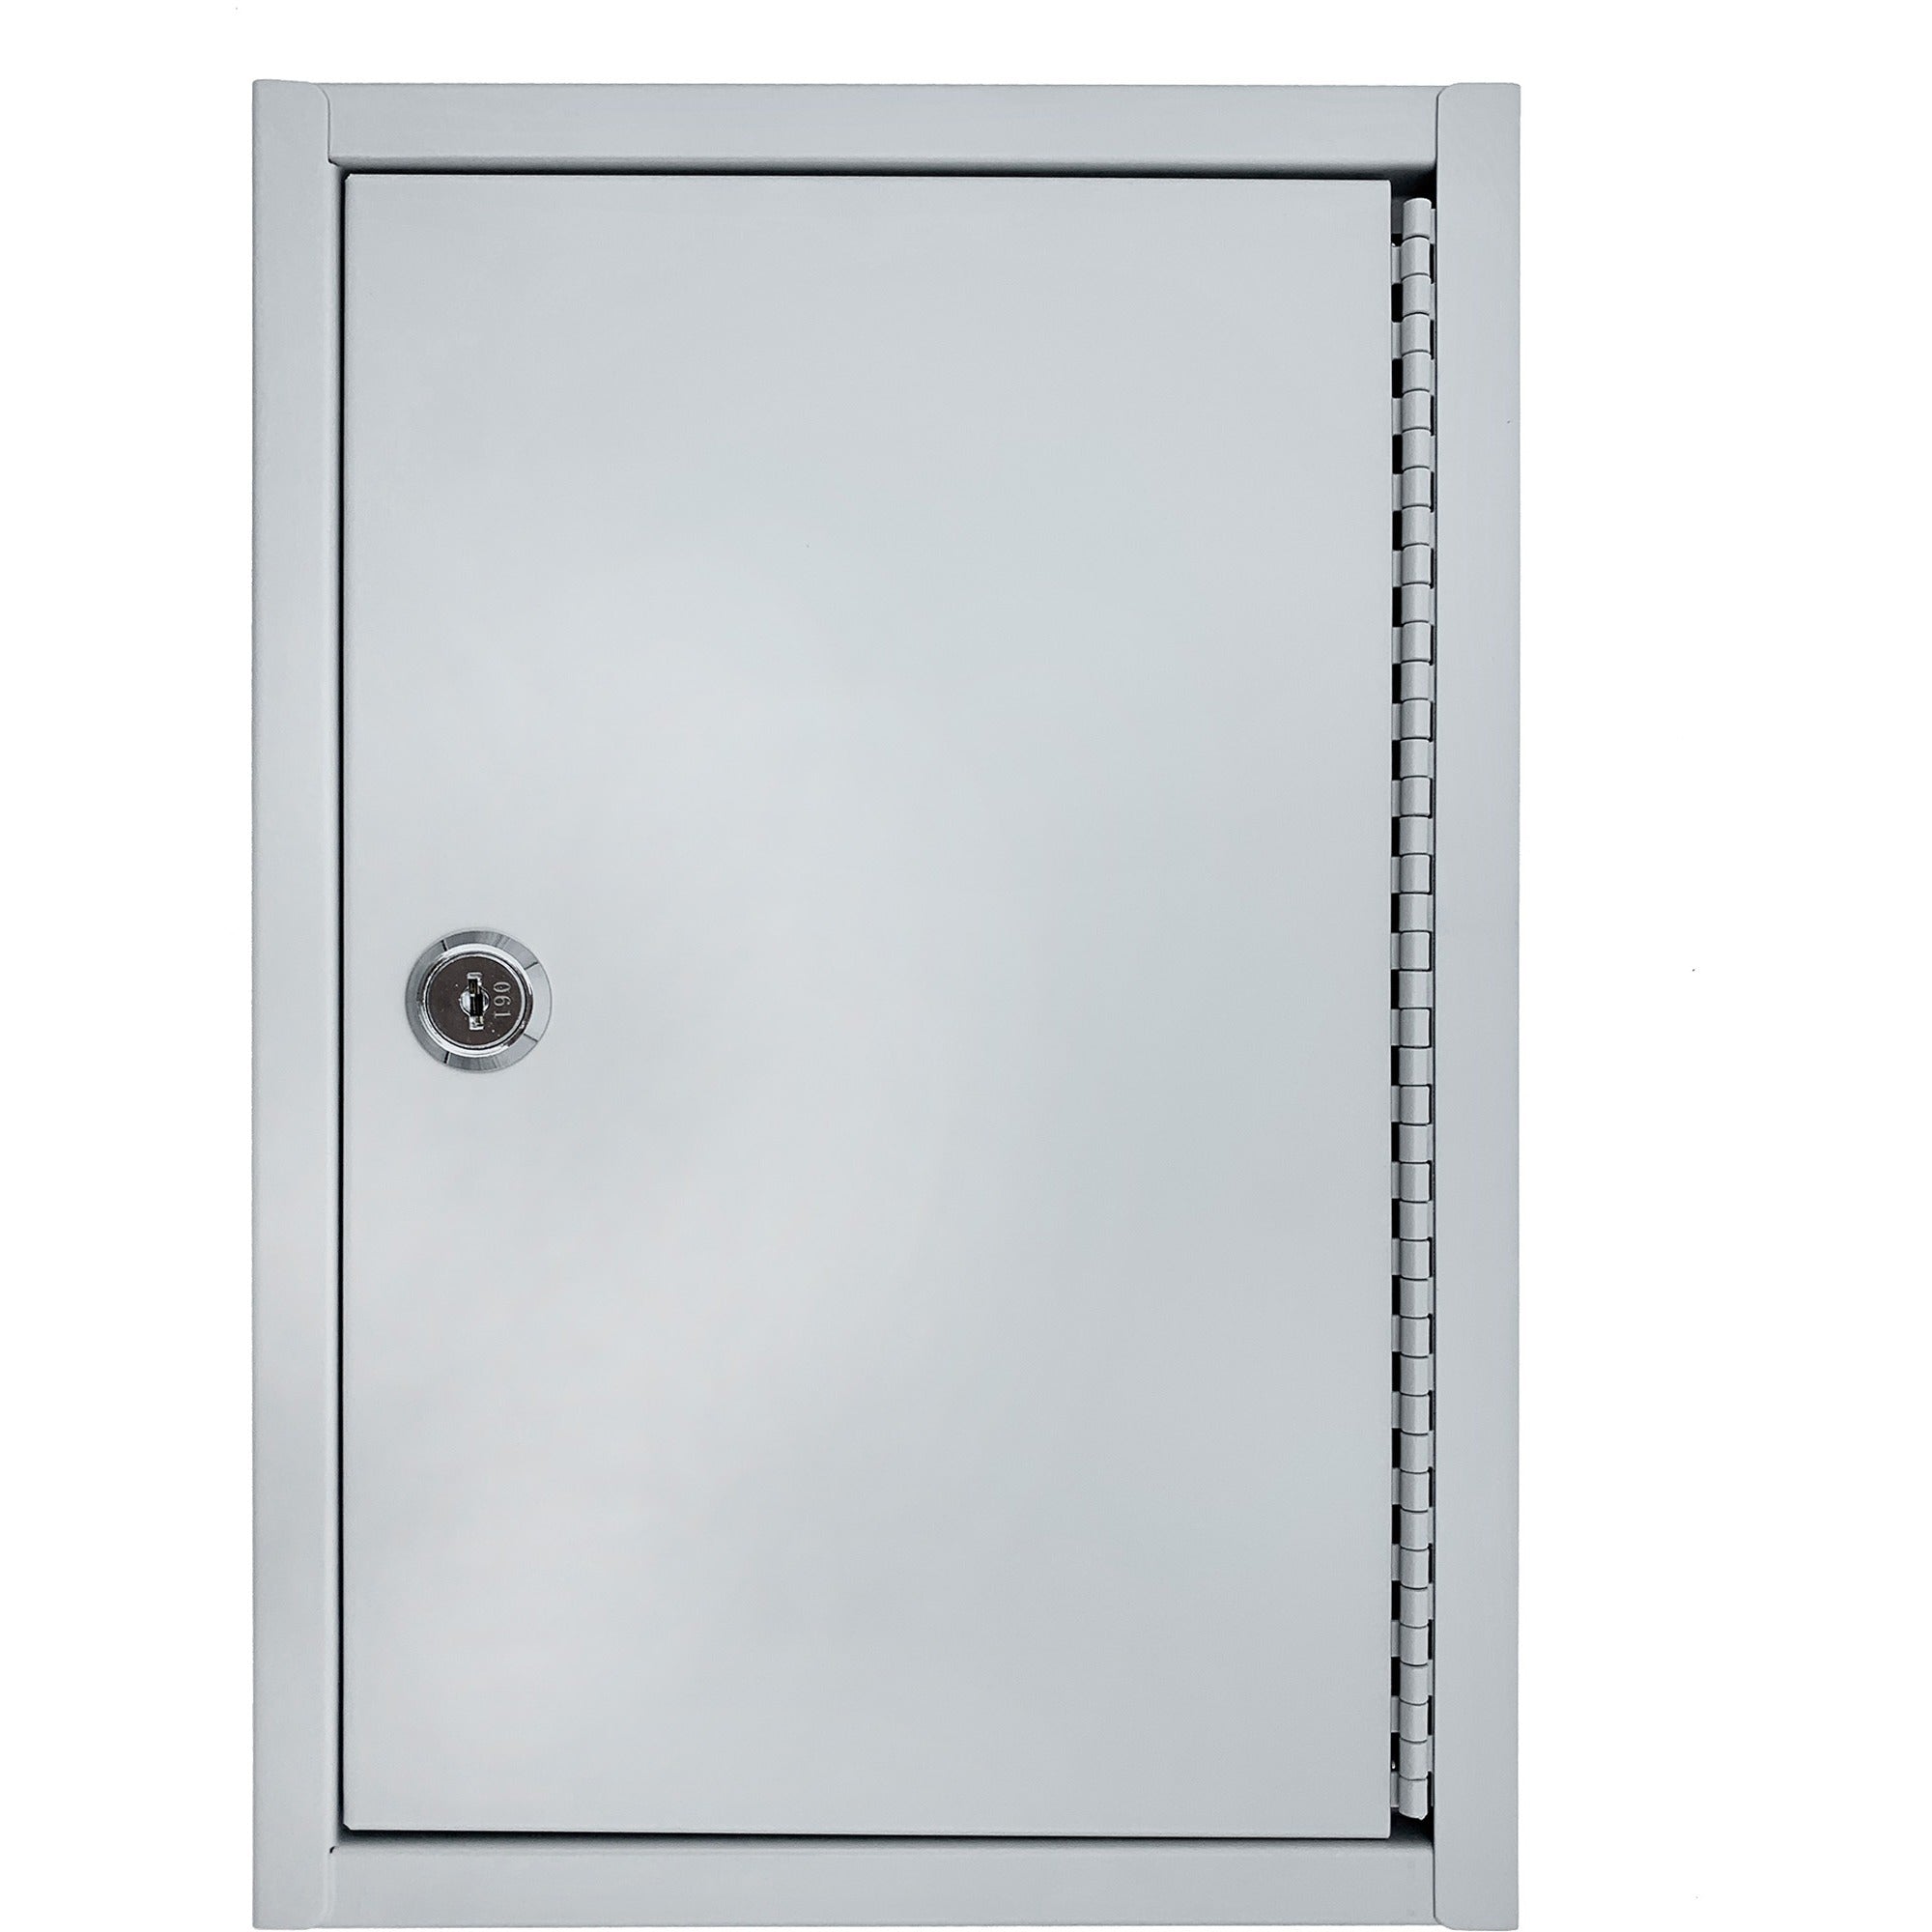 huron-slotted-heavy-duty-key-cabinet-keyhole-slot-heavy-duty-durable-locking-system-gray-steel_hurhasz0126 - 2